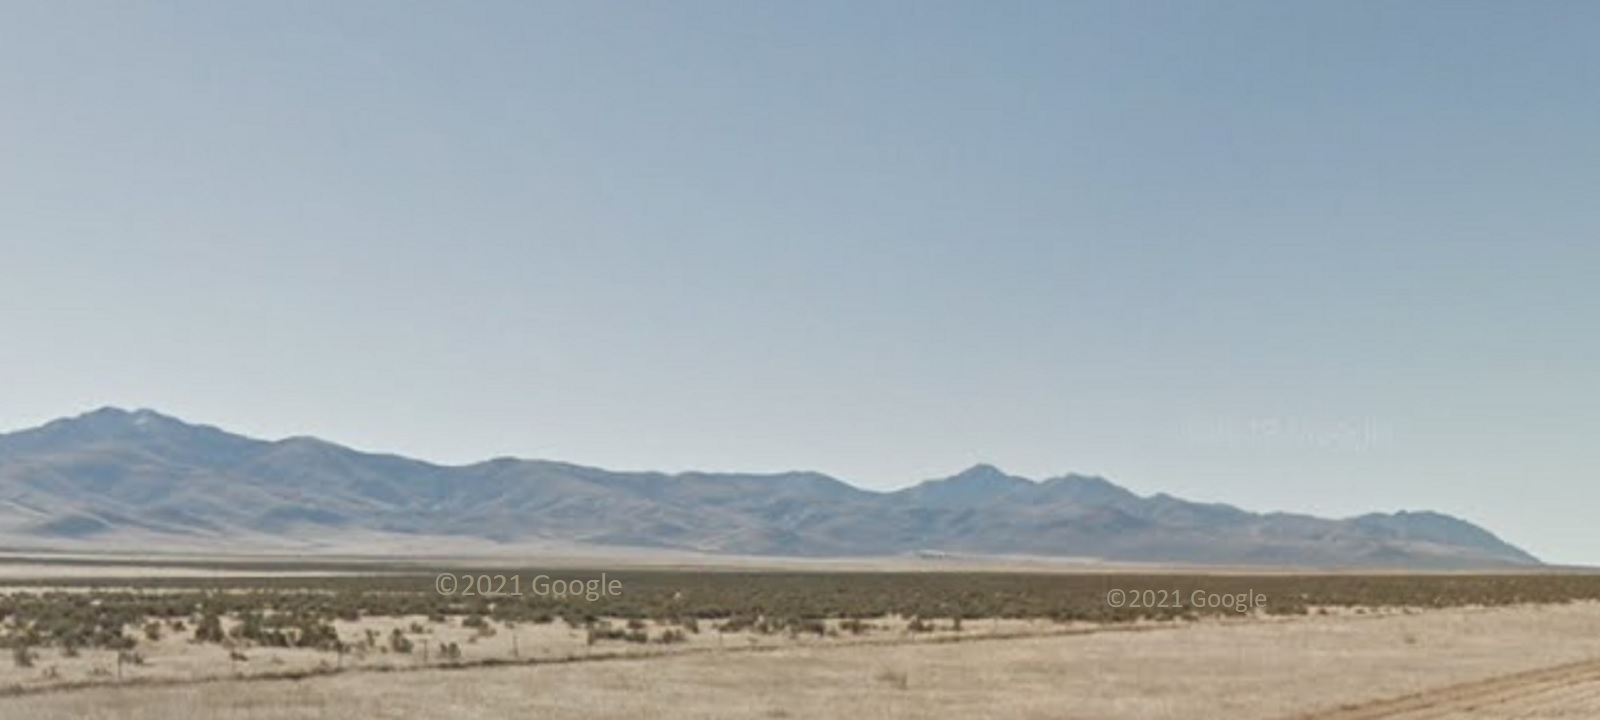 Desert mountains in Nevada